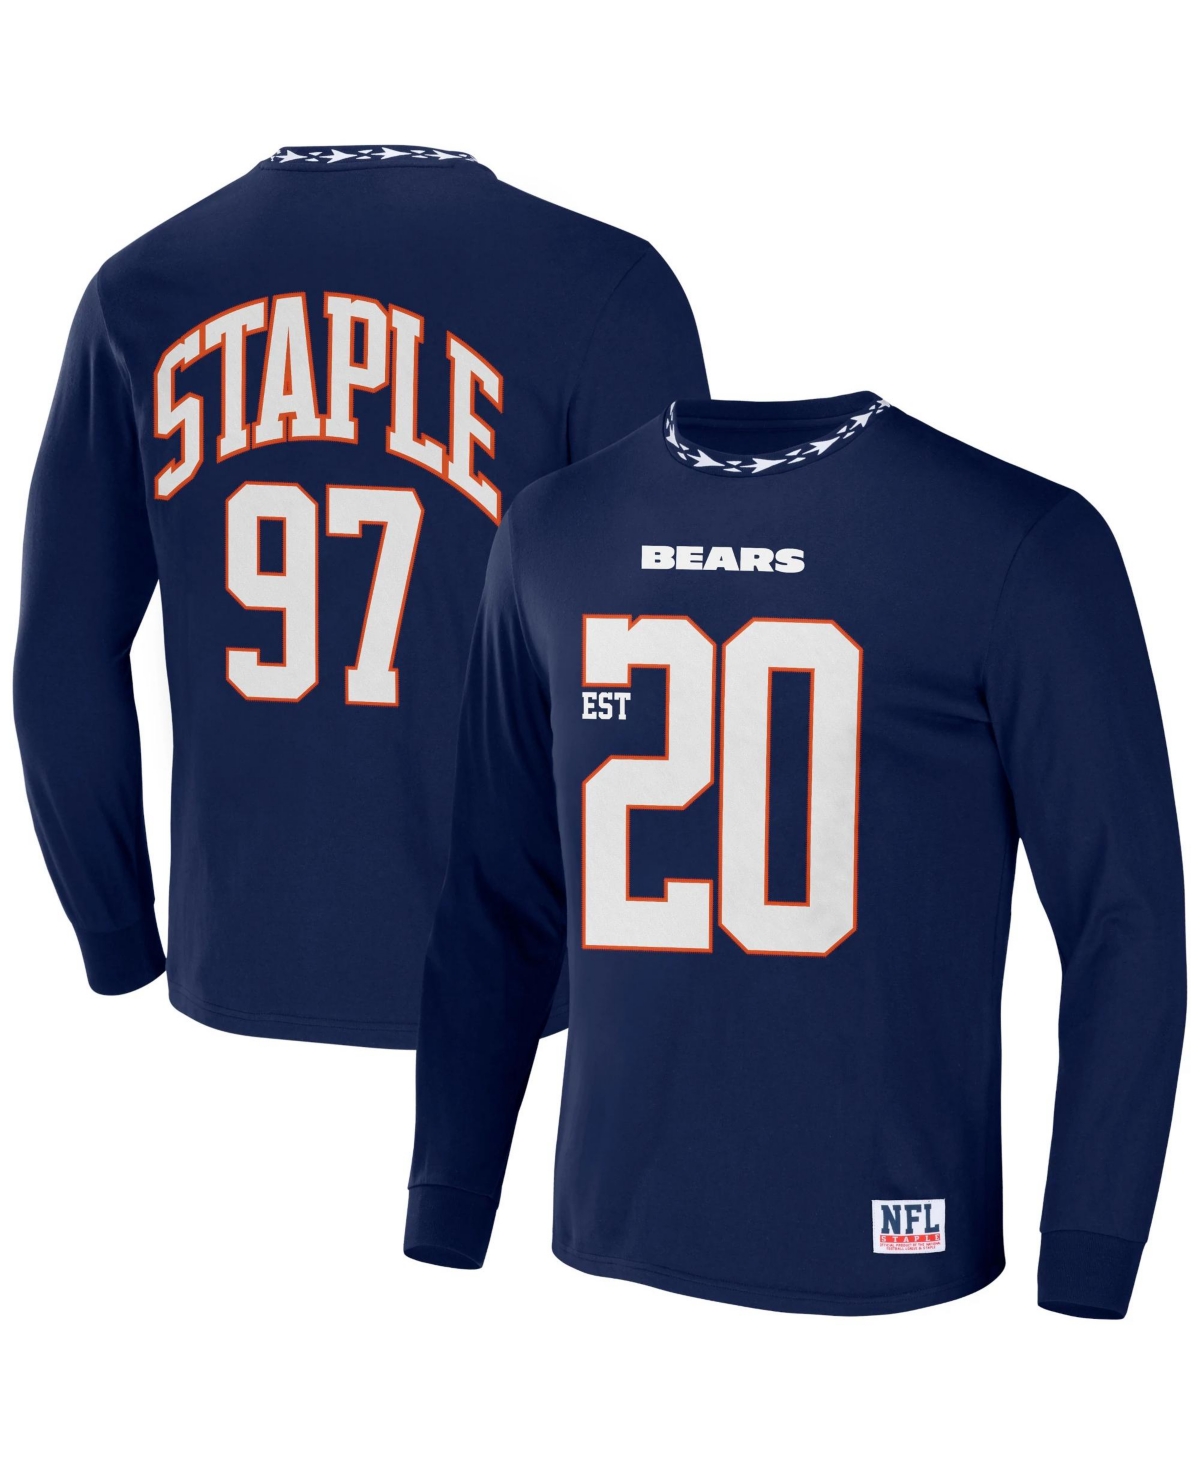 Men's Nfl X Staple Navy Chicago Bears Core Long Sleeve Jersey Style T-shirt - Navy